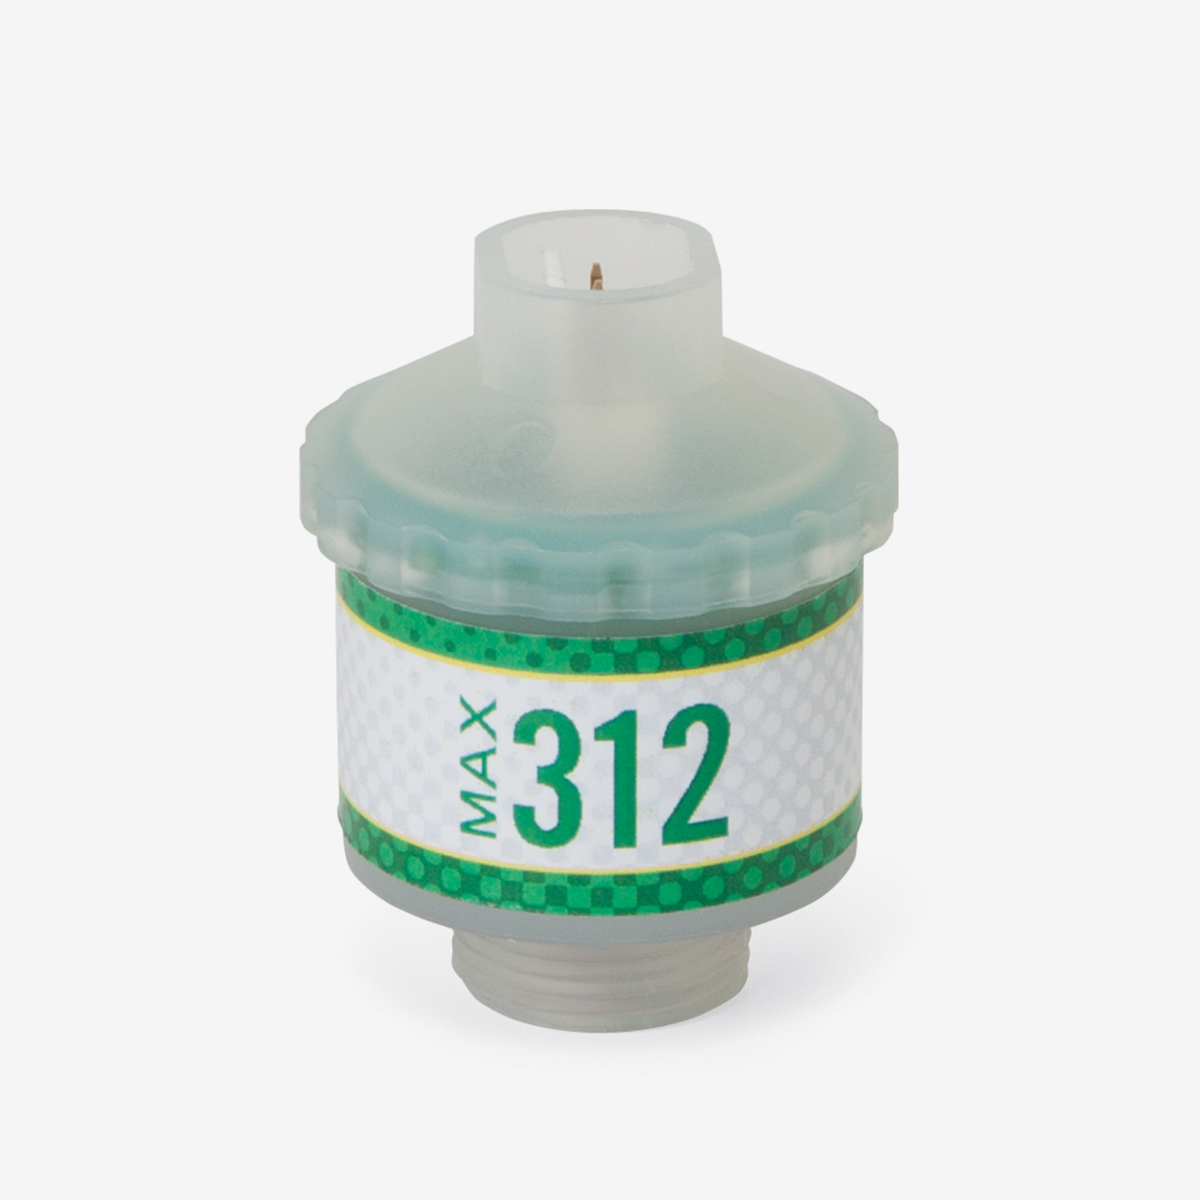 Translucent and green Max-312 scuba sensor on white background